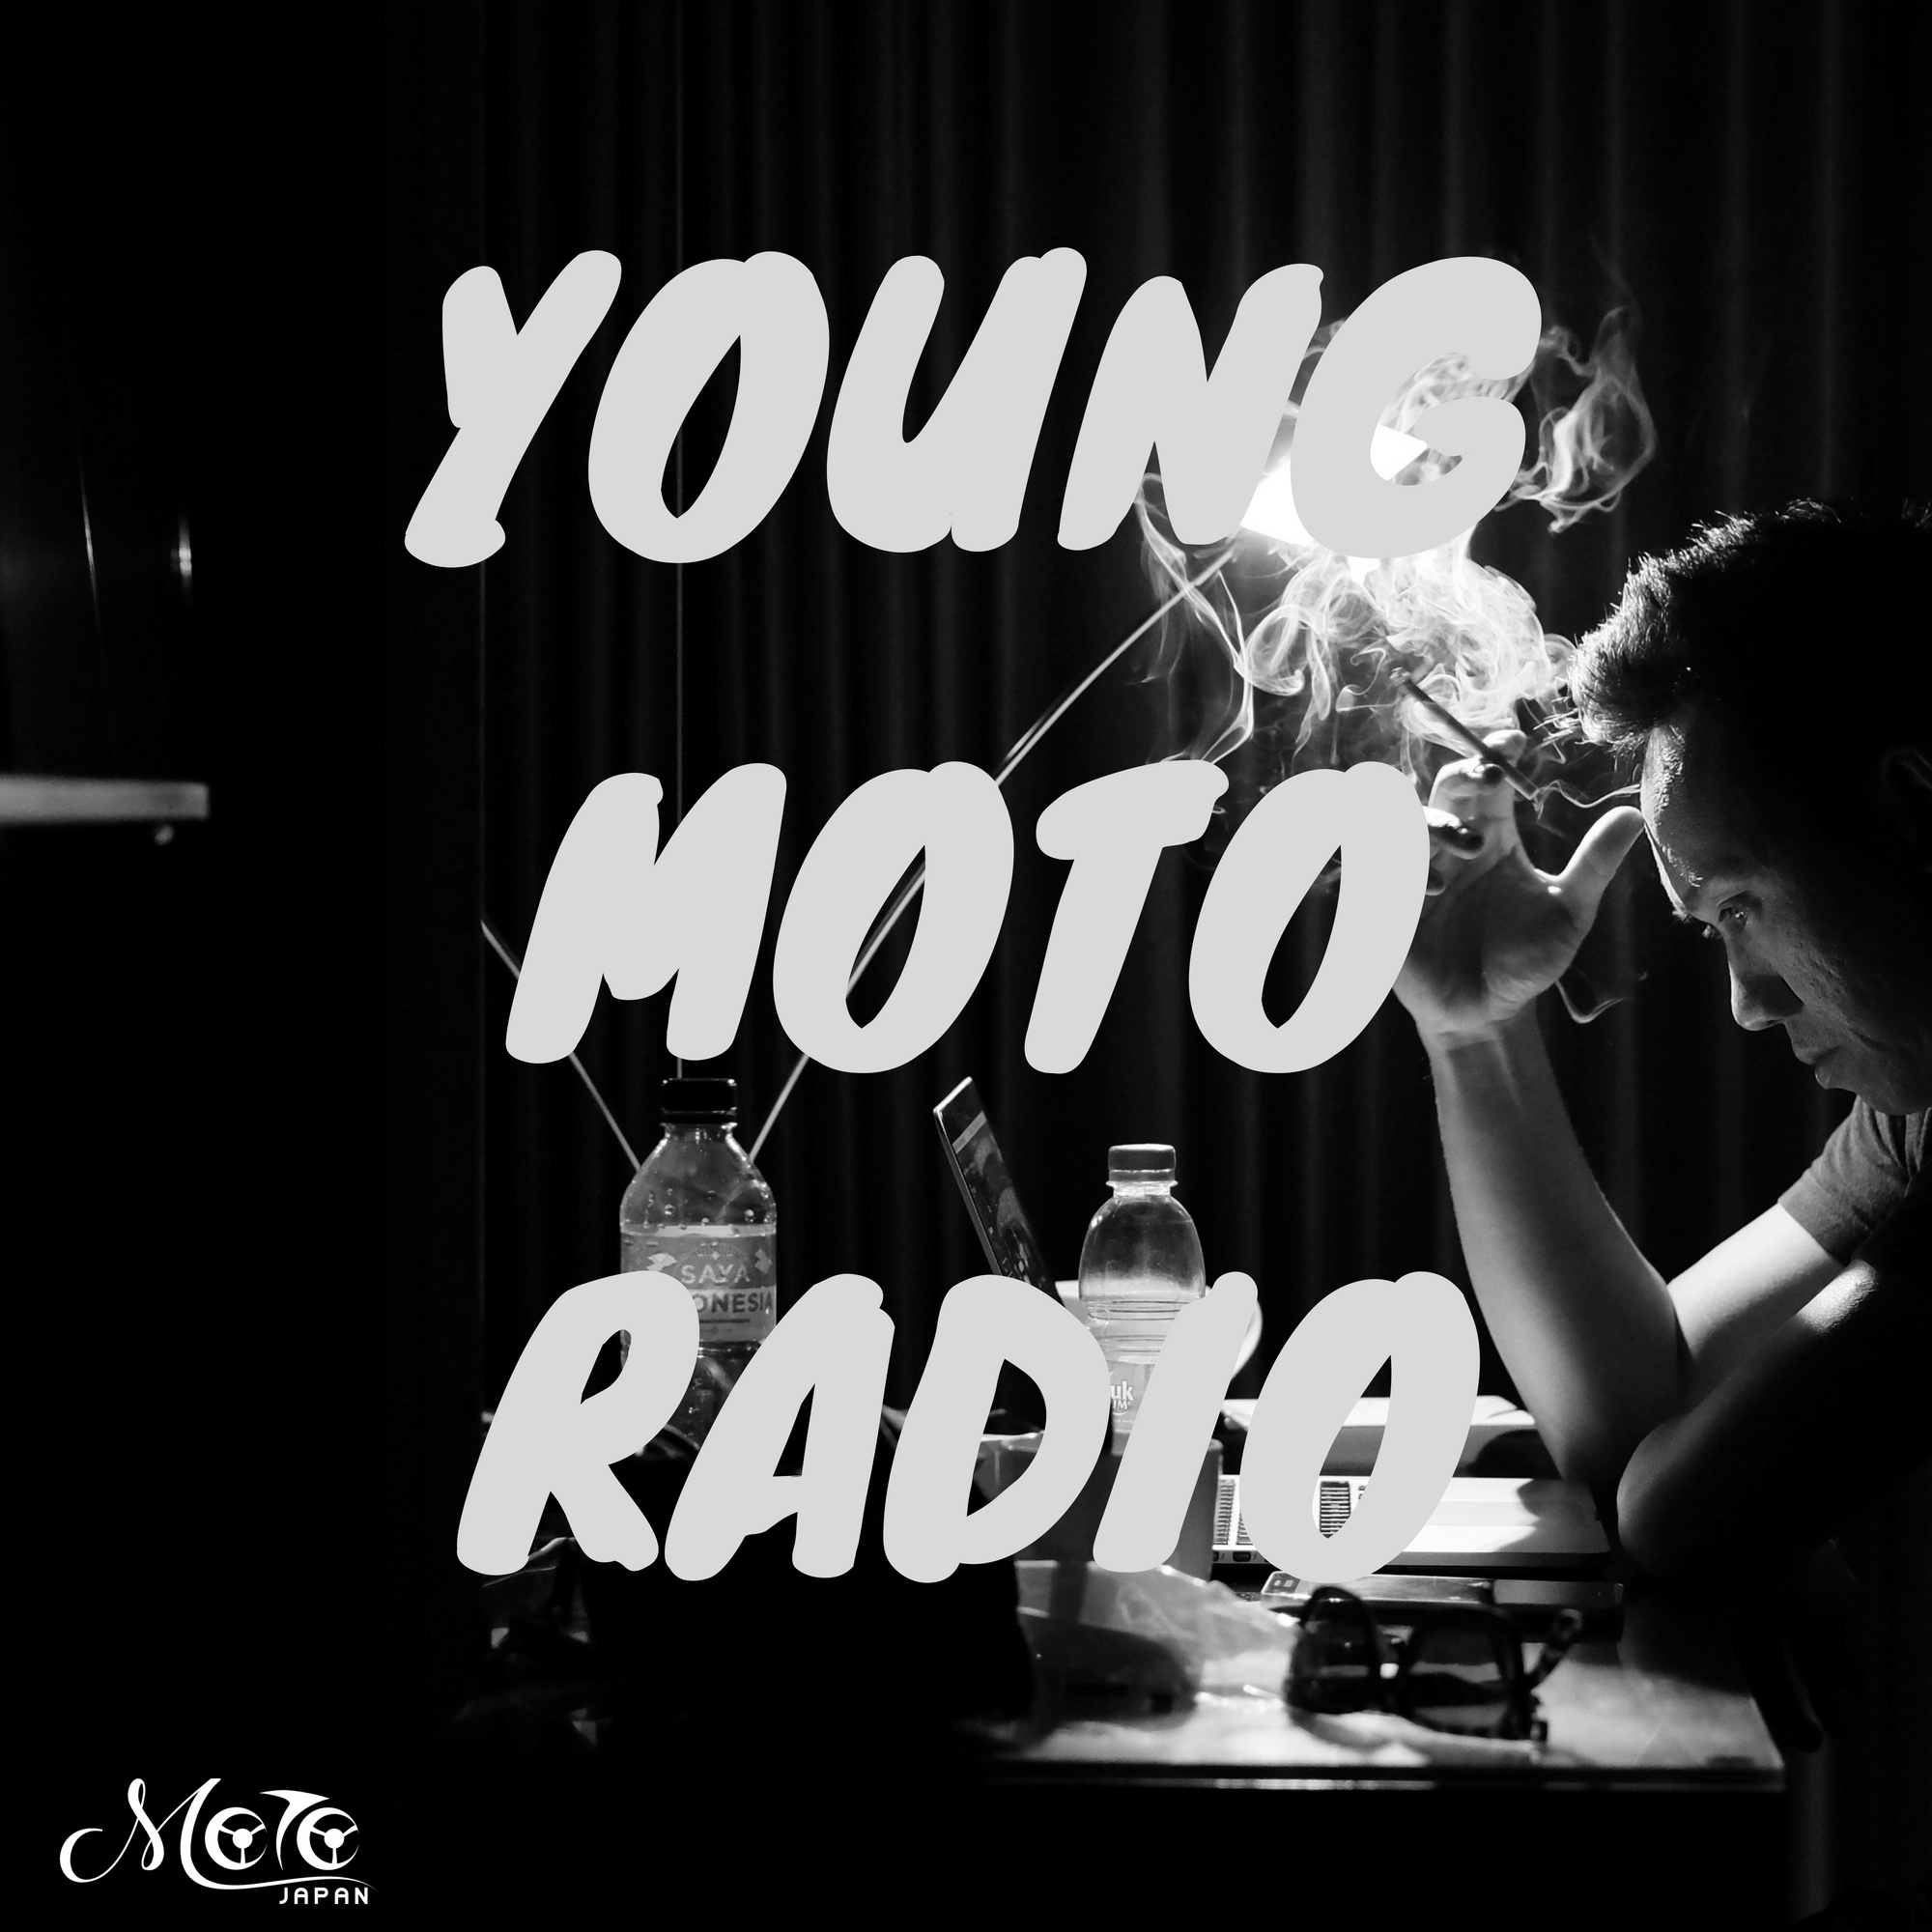 Moto Japan MotoBe Young Moto Radio